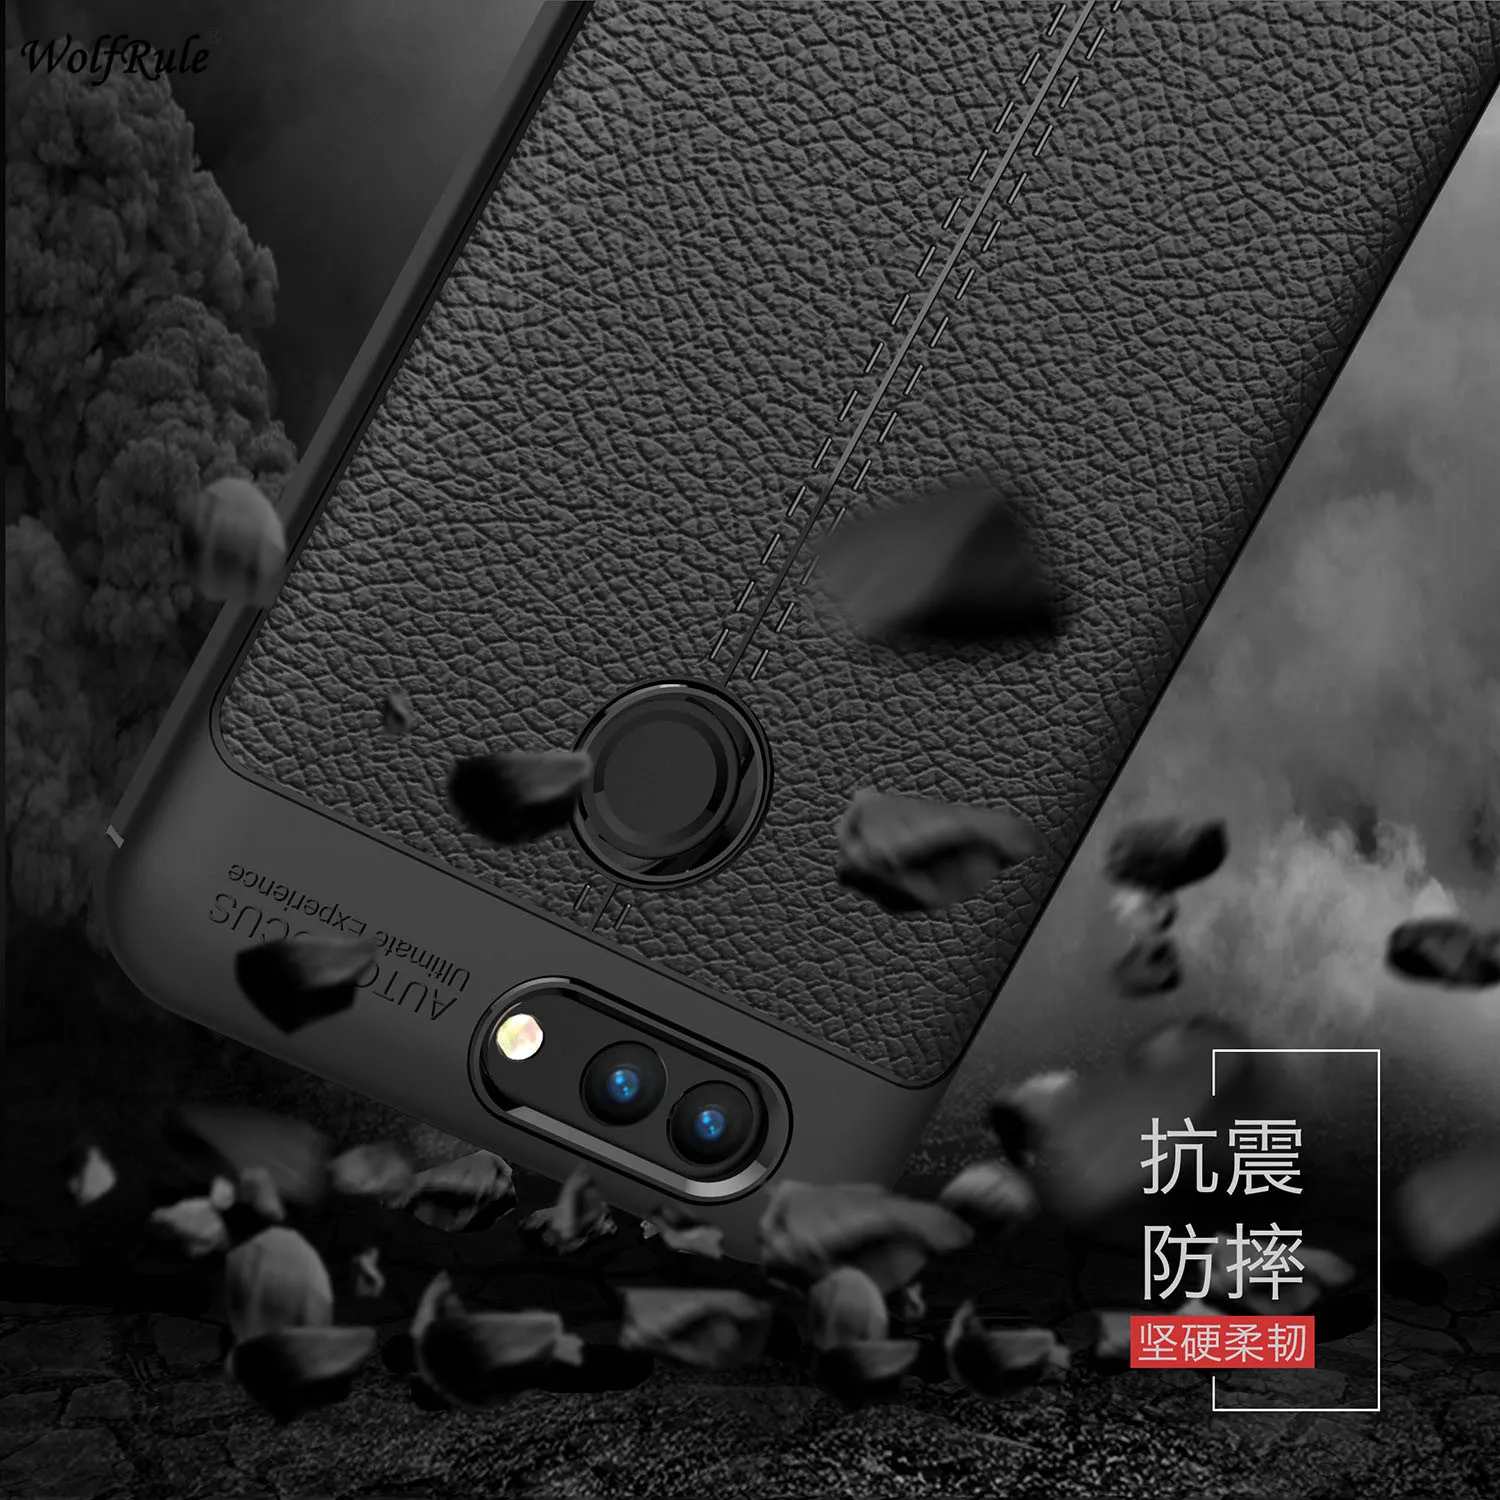 WolfRule Huawei Nova 2 Plus Case Nova 2 Plus Cover Shockproof Luxury Leather TPU Phone Case For Huawei Nova 2 Plus Fundas 5.5'